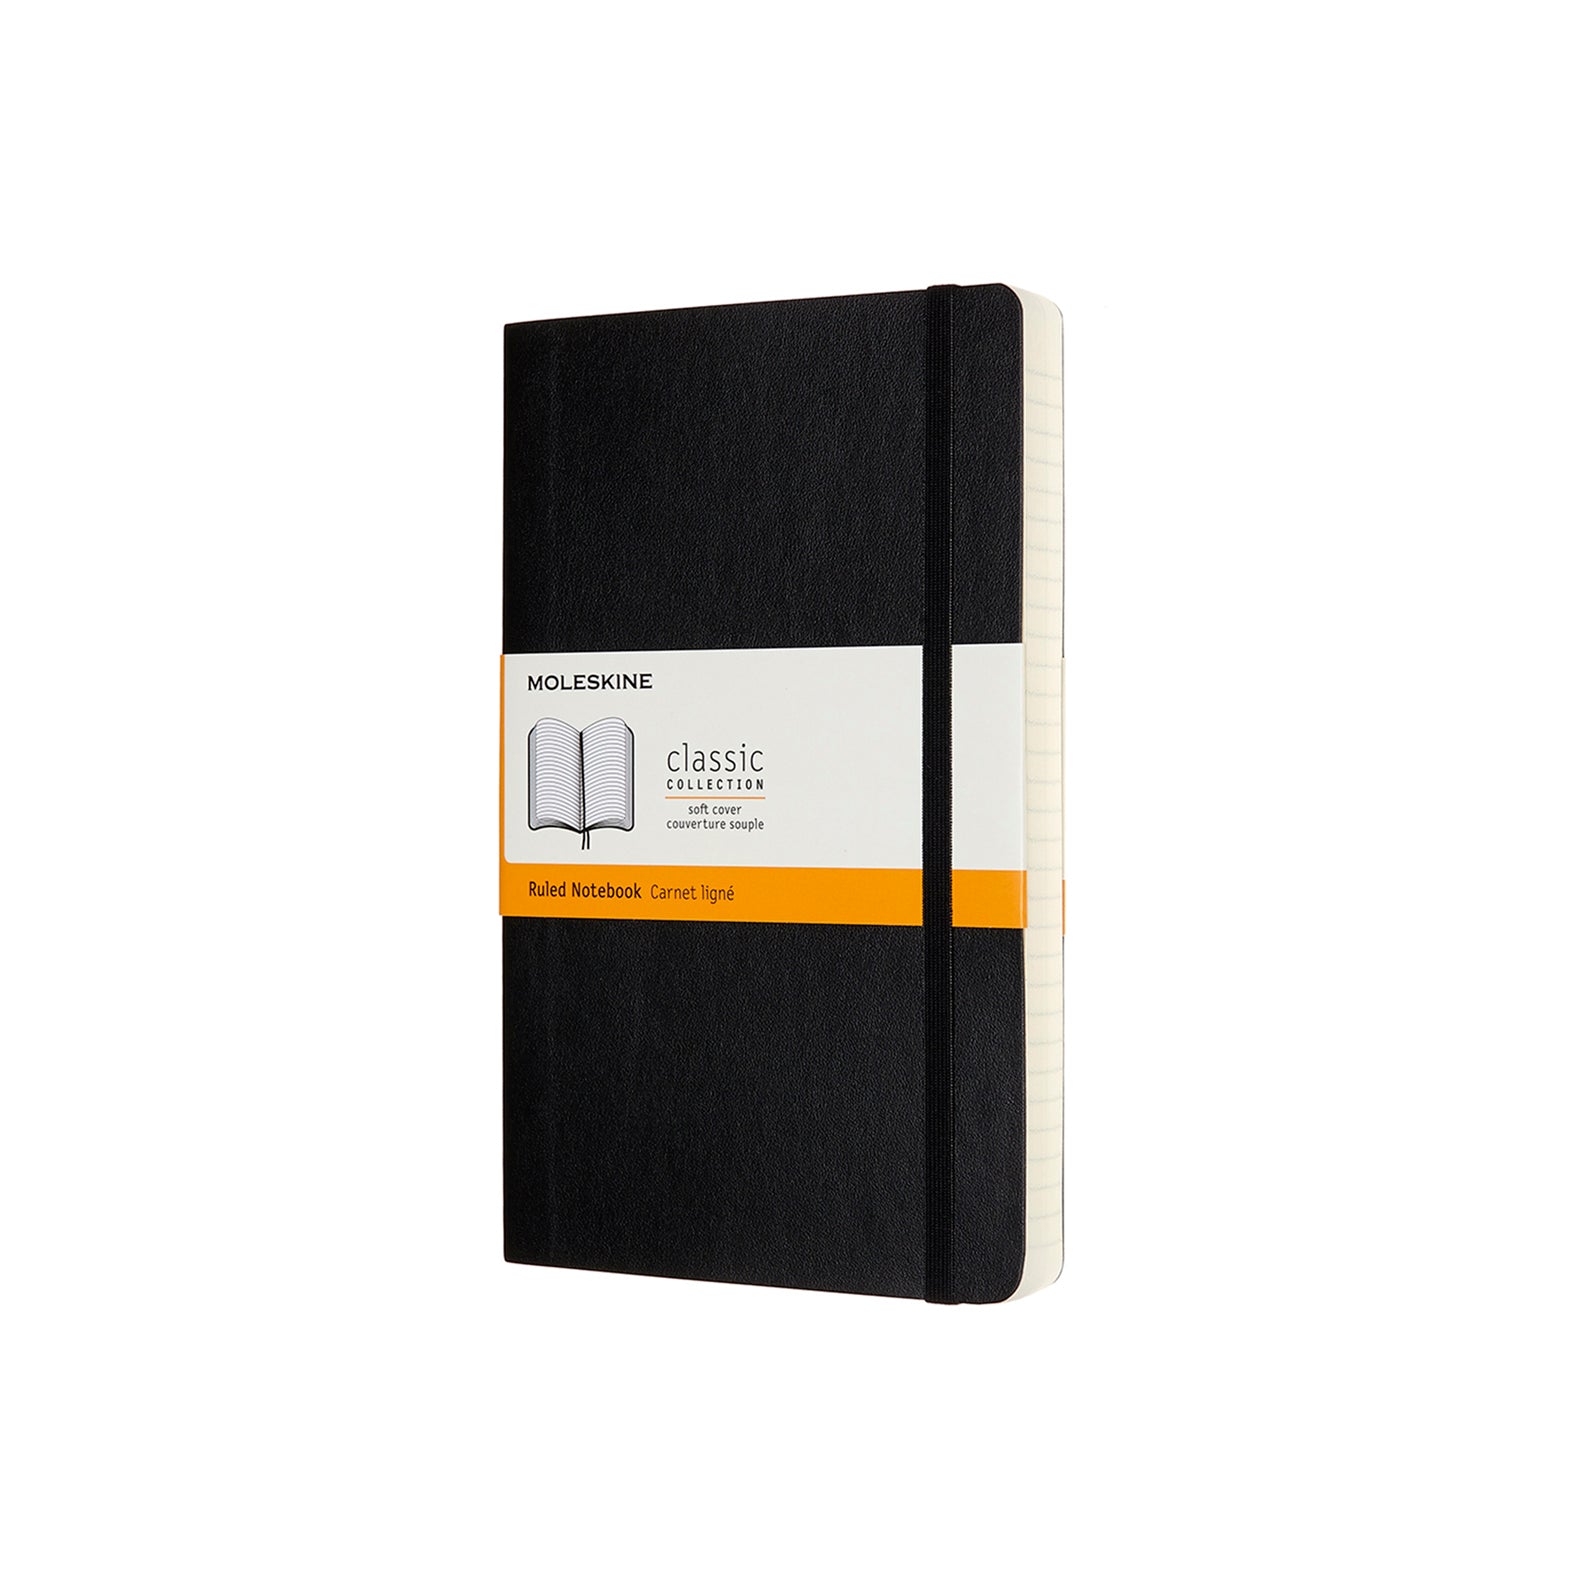 Moleskine Classic Notebook - Double Layout Black